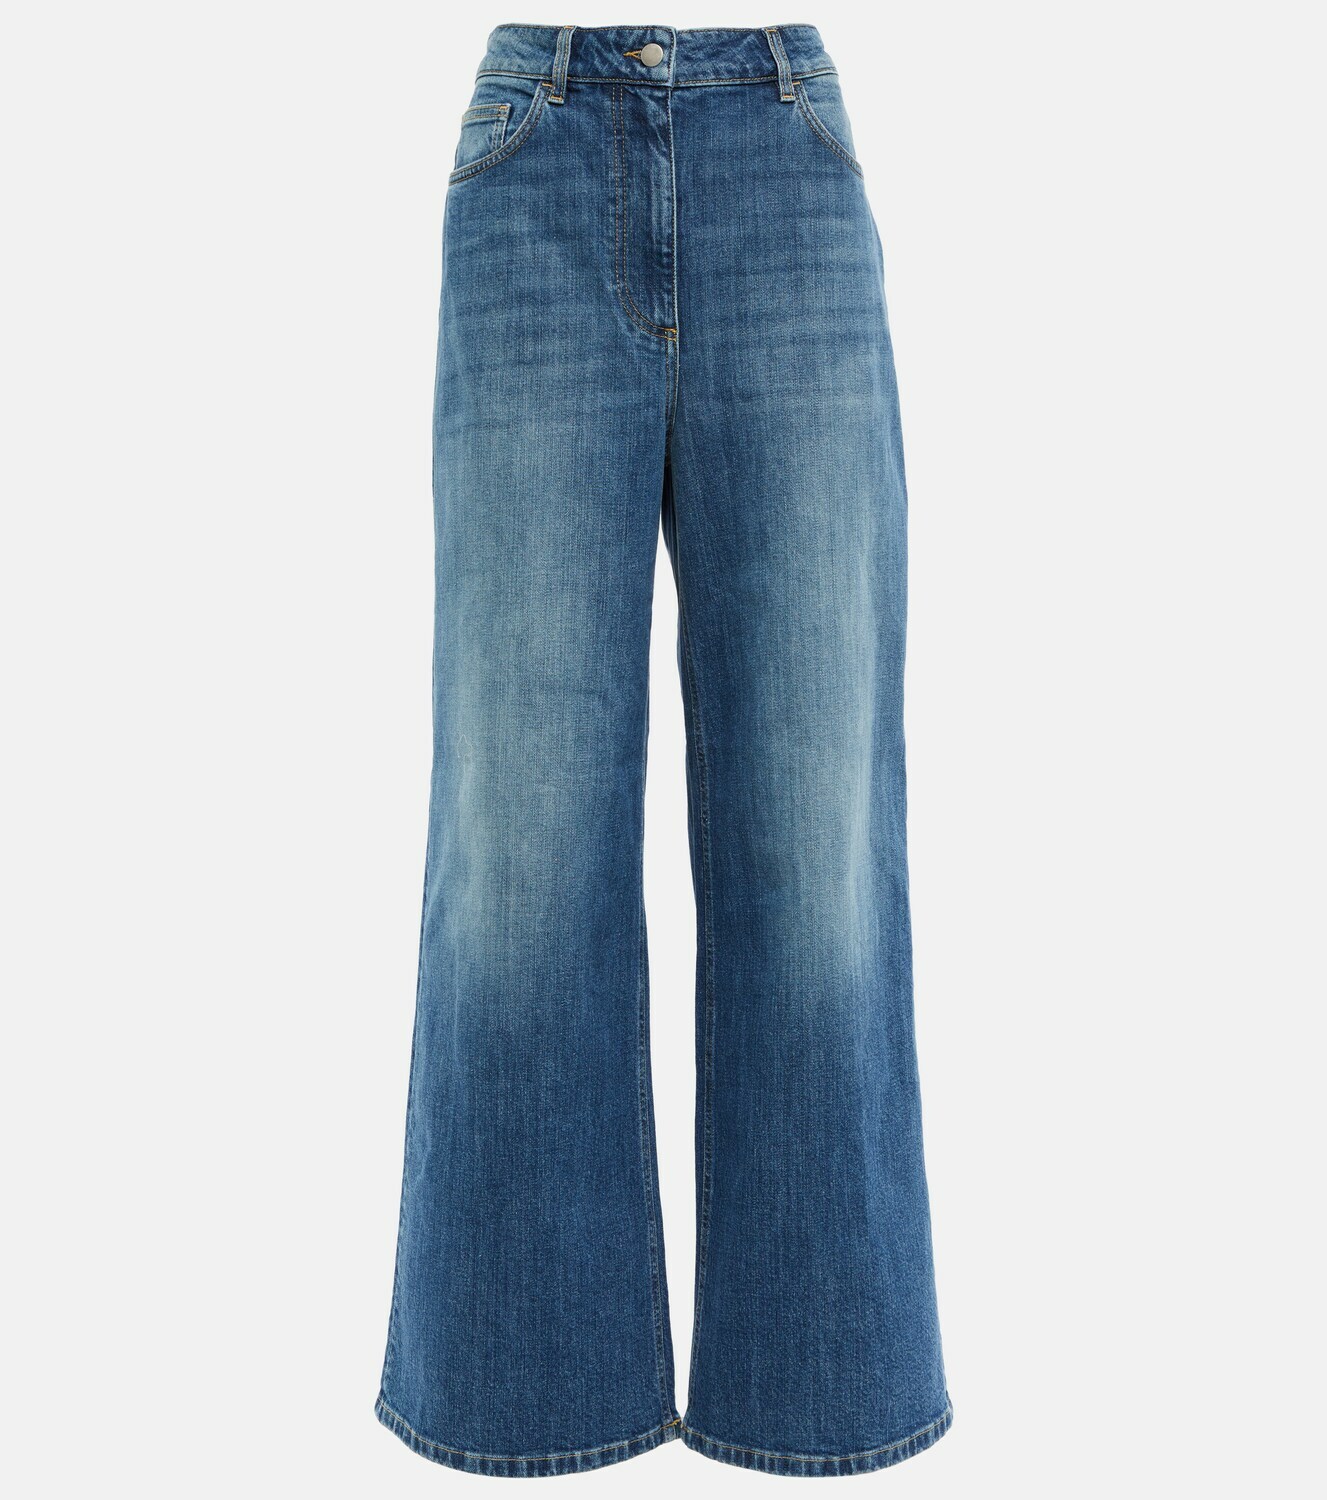 Altuzarra - High-rise wide-leg jeans Altuzarra